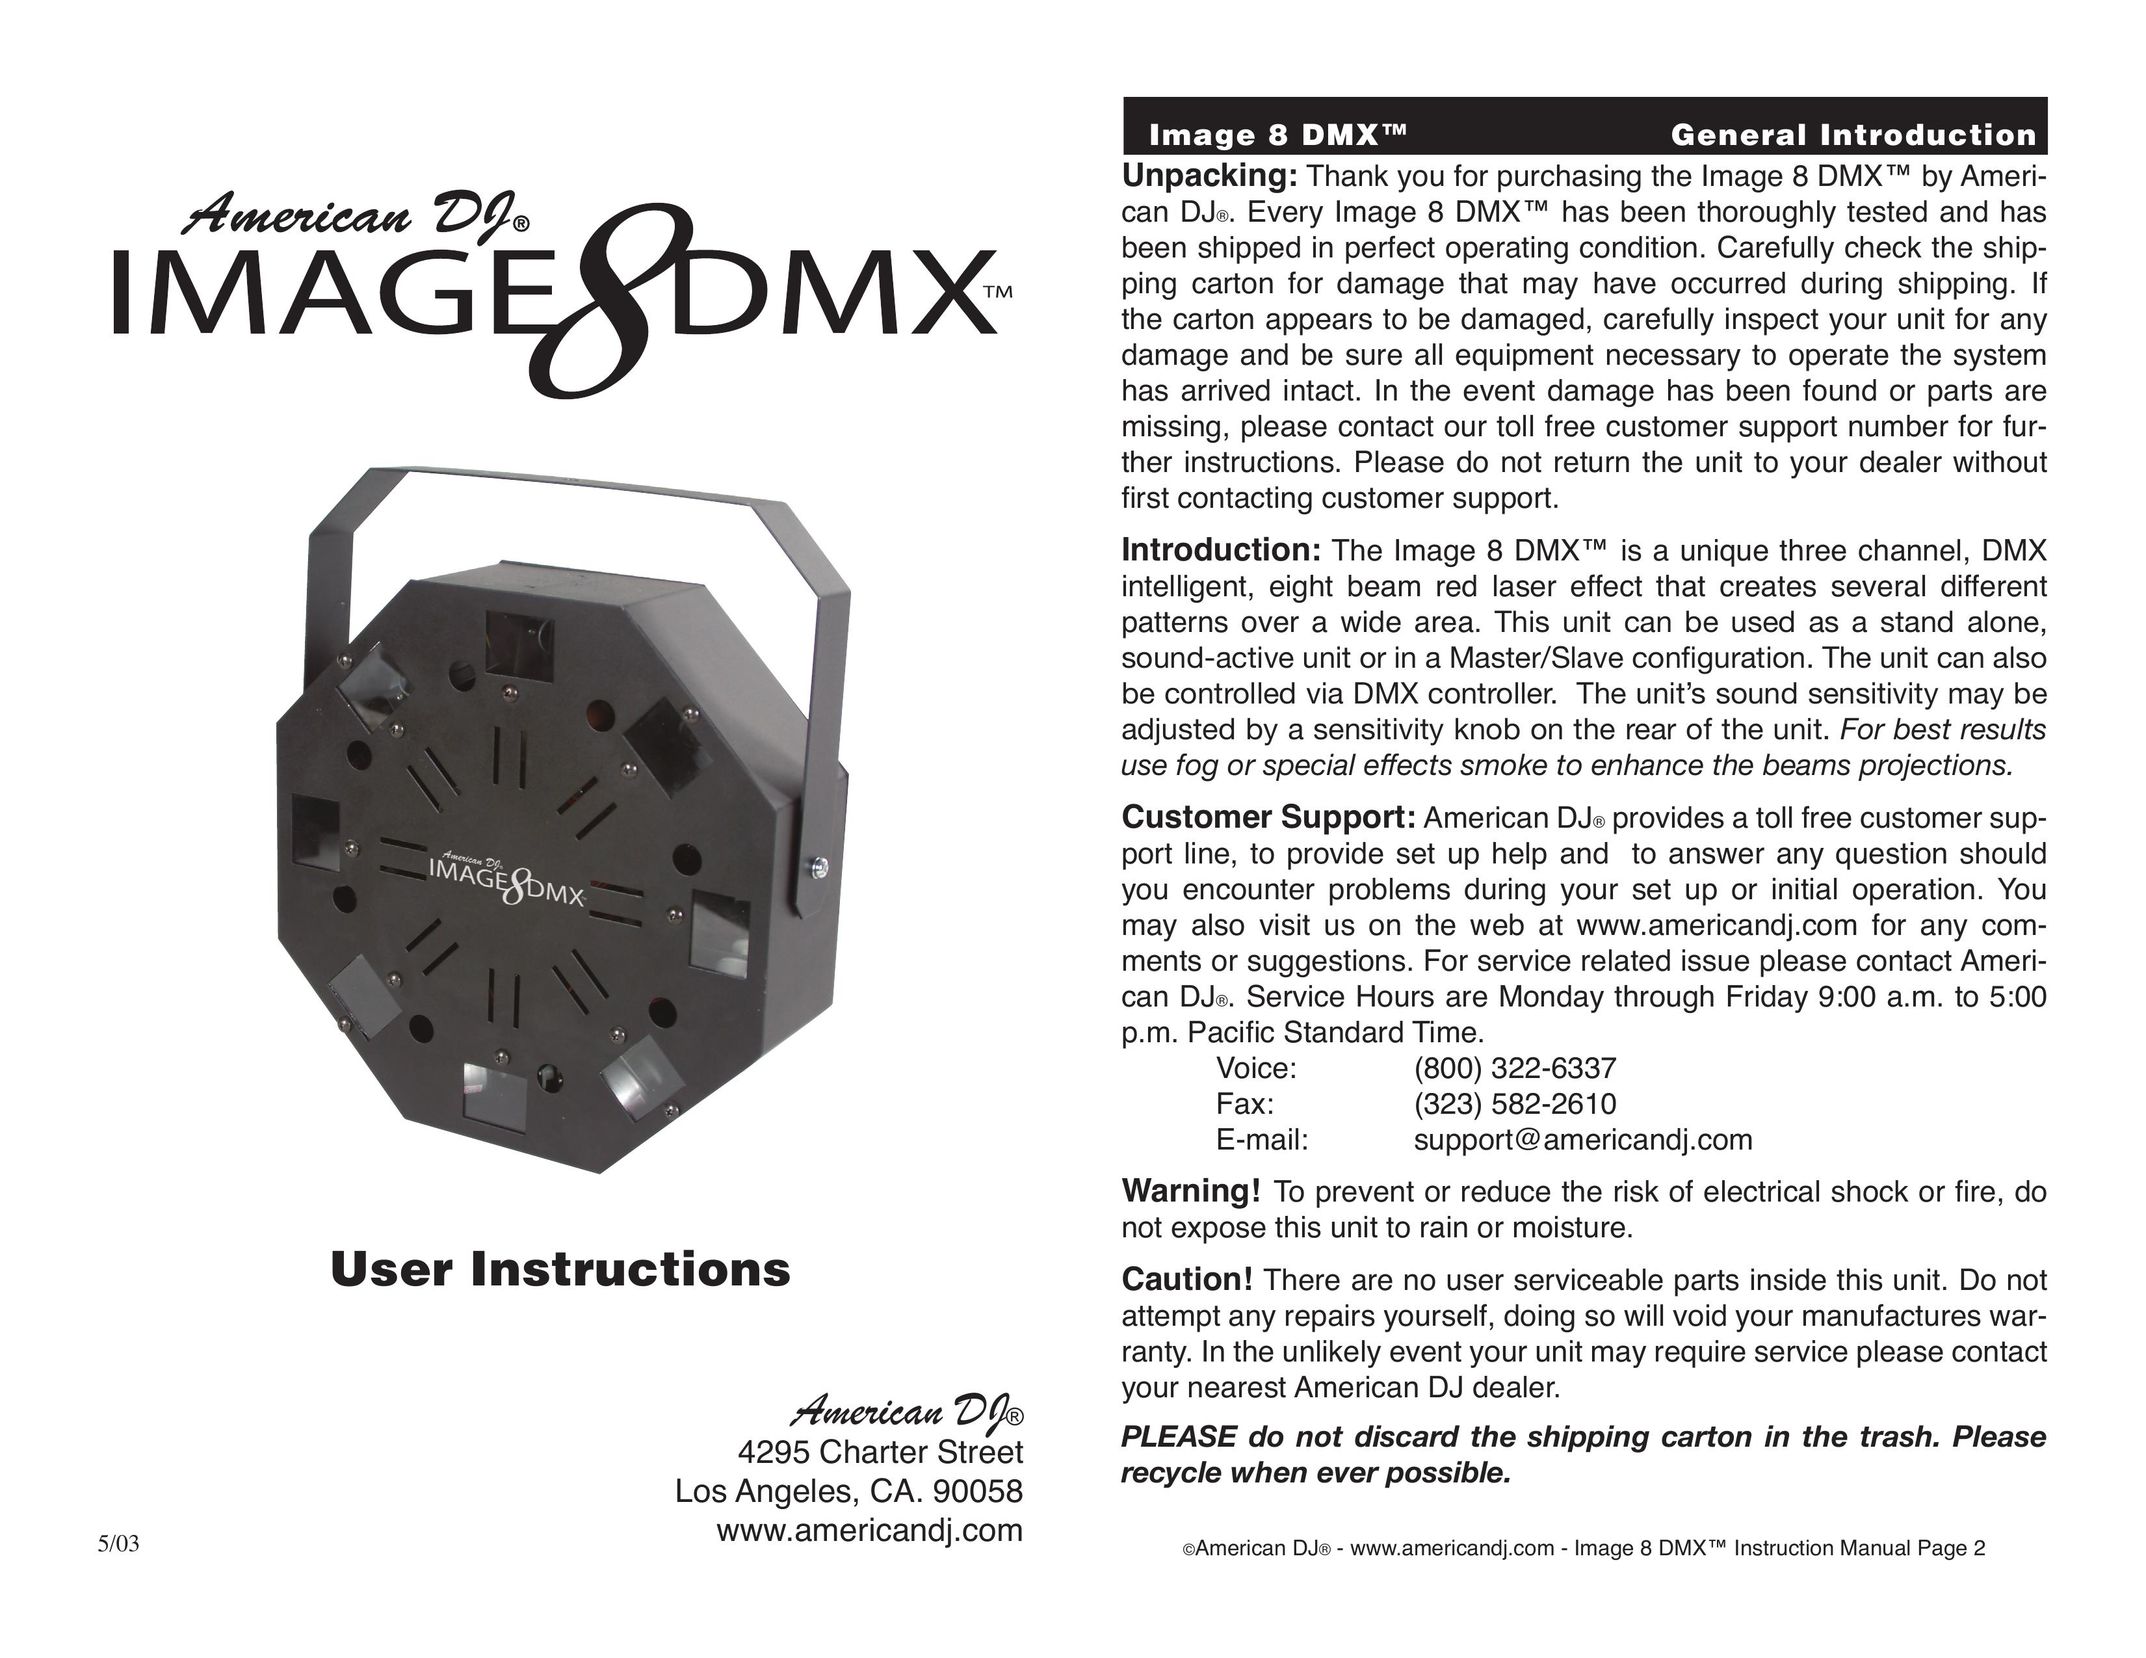 American DJ IMAGE 8 DMX Laser Pointer User Manual